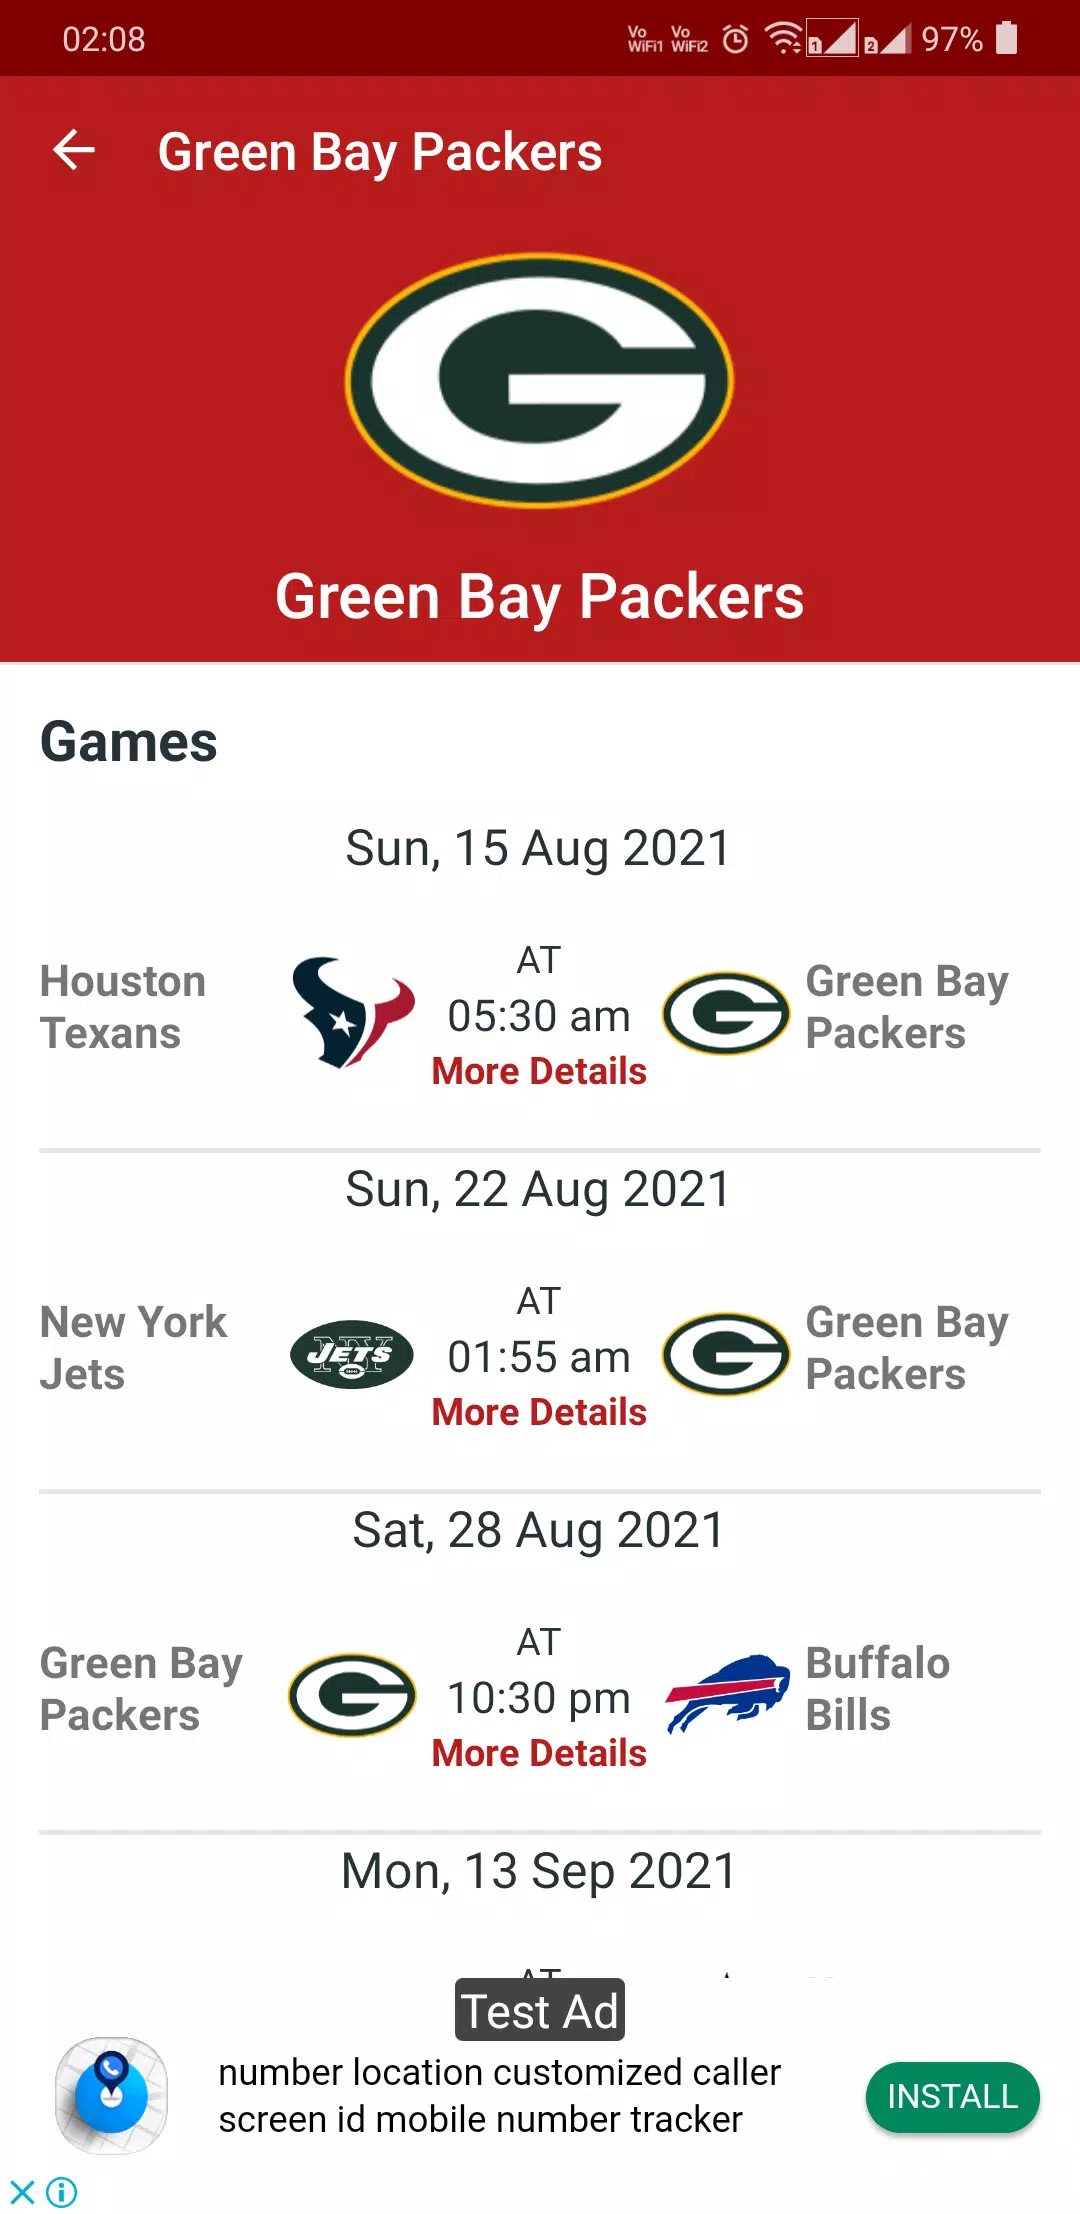 2021 NFL Football Schedule & Scores Apk Download for Android- Latest  version 2.1.0- com.schedule.nflscores